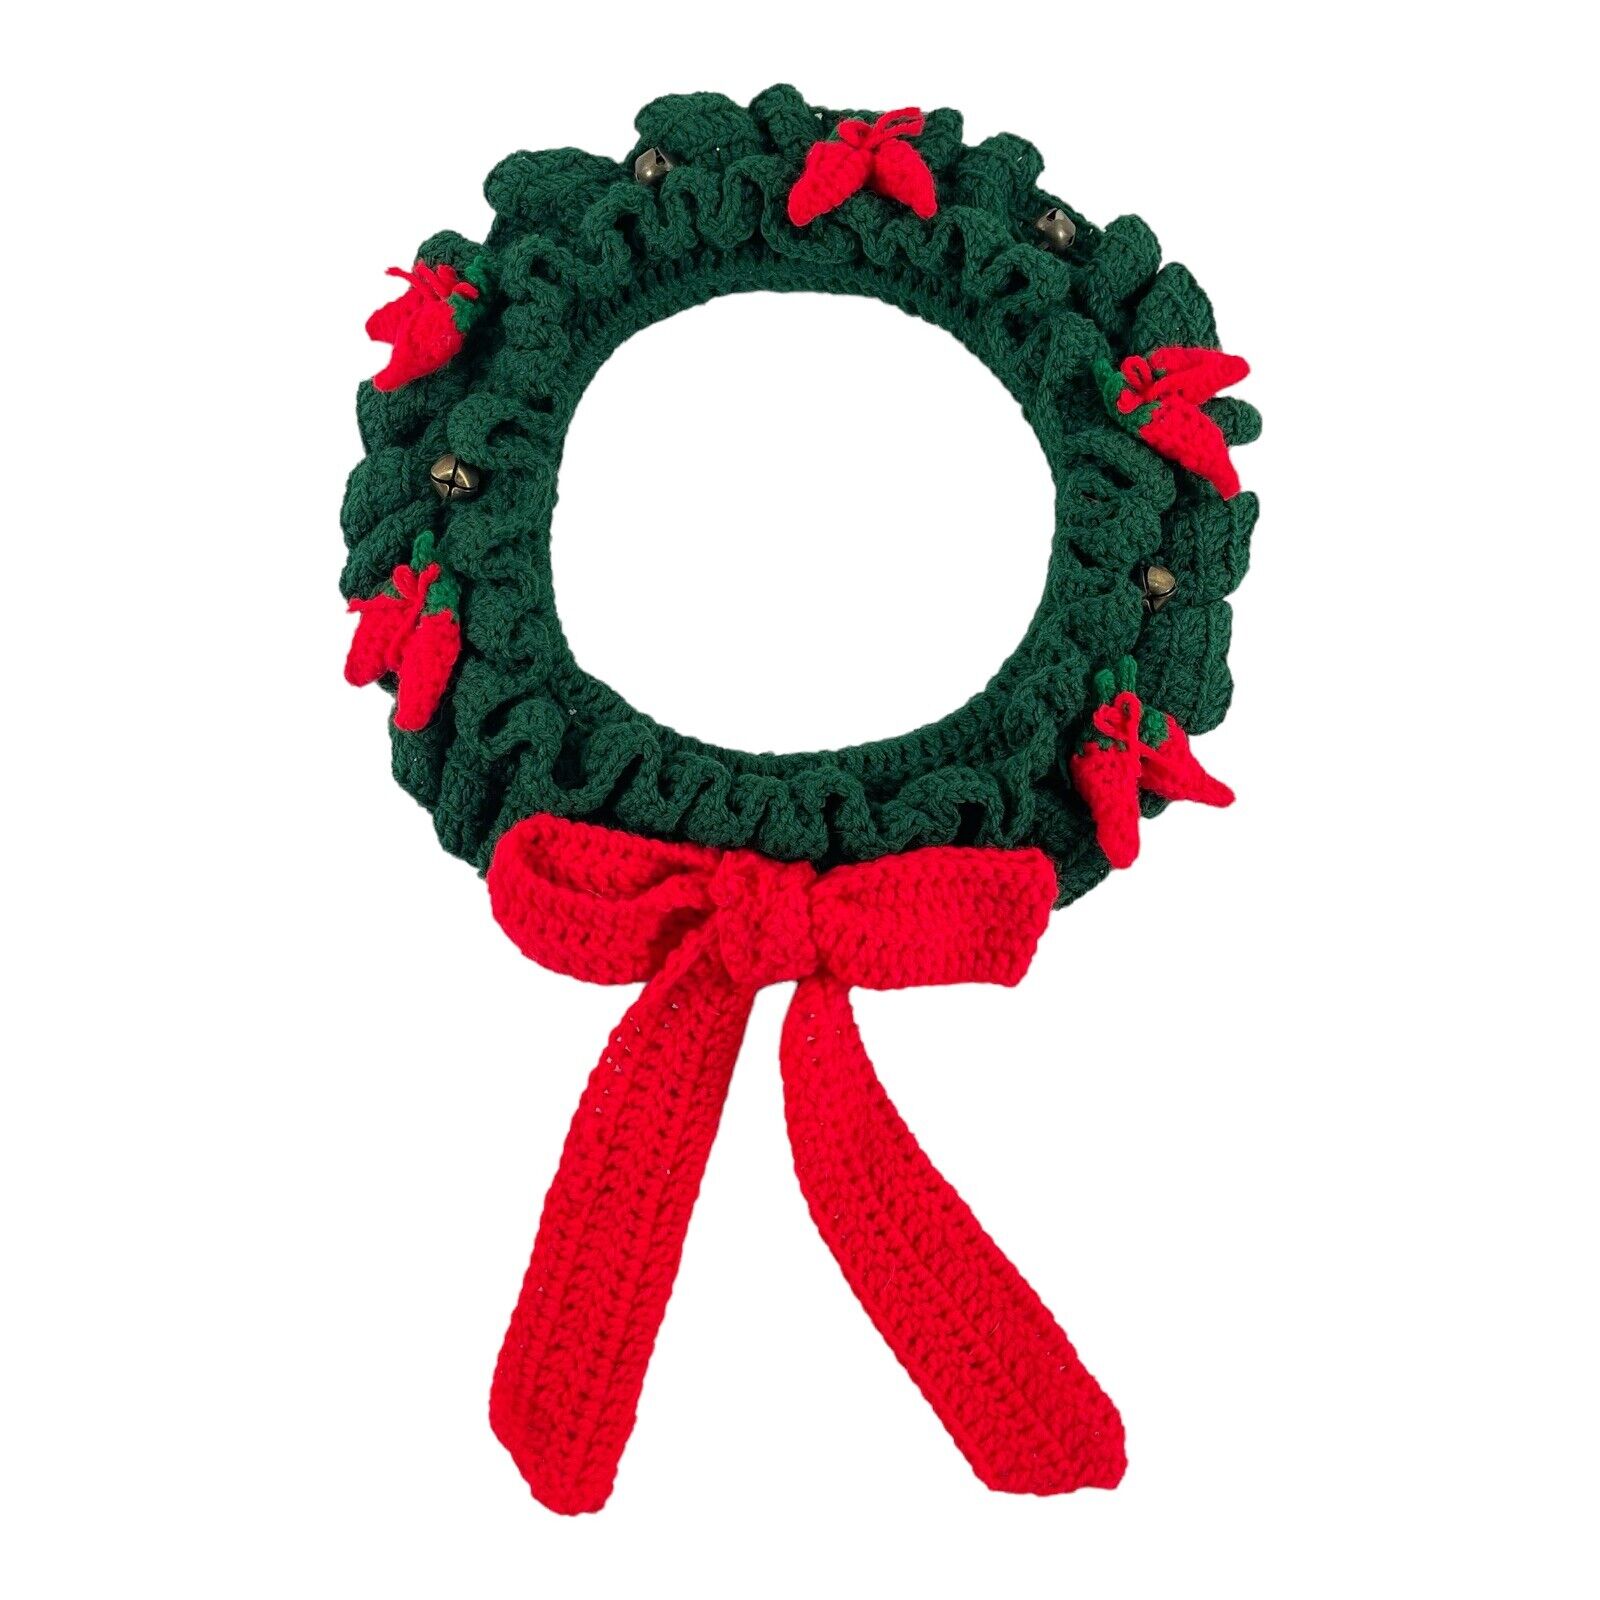 Vintage Handmade Green Crocheted Christmas Wreath Ornament Red Bows Jingle Bells